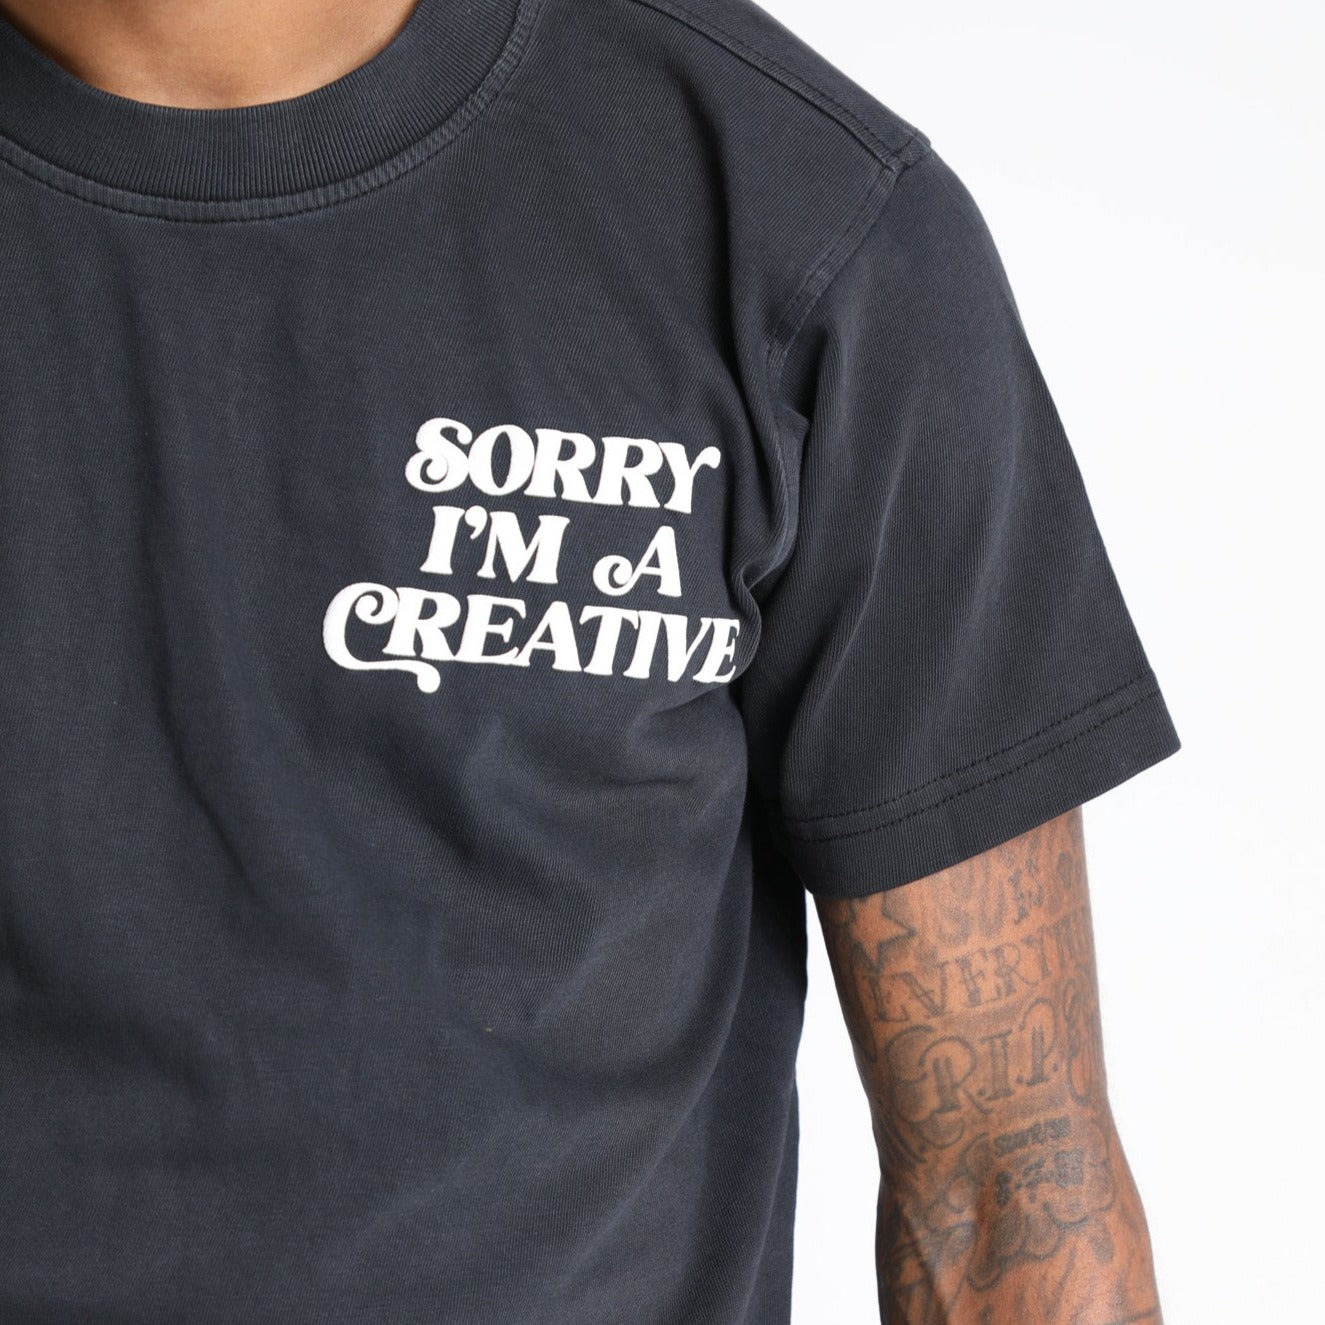 Sorry I'm A Creative - T-Shirt (Black +White)